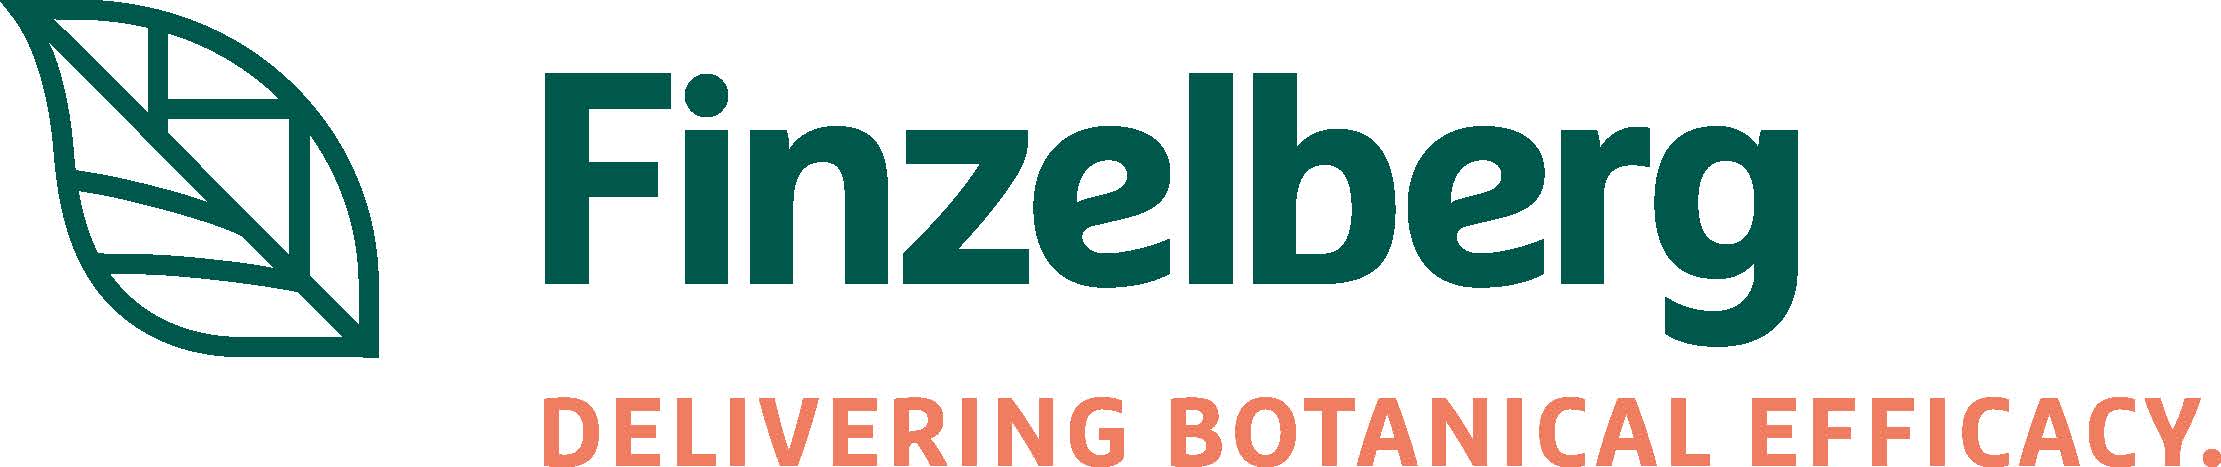 Logo Finzelberg GmbH & Co. KG